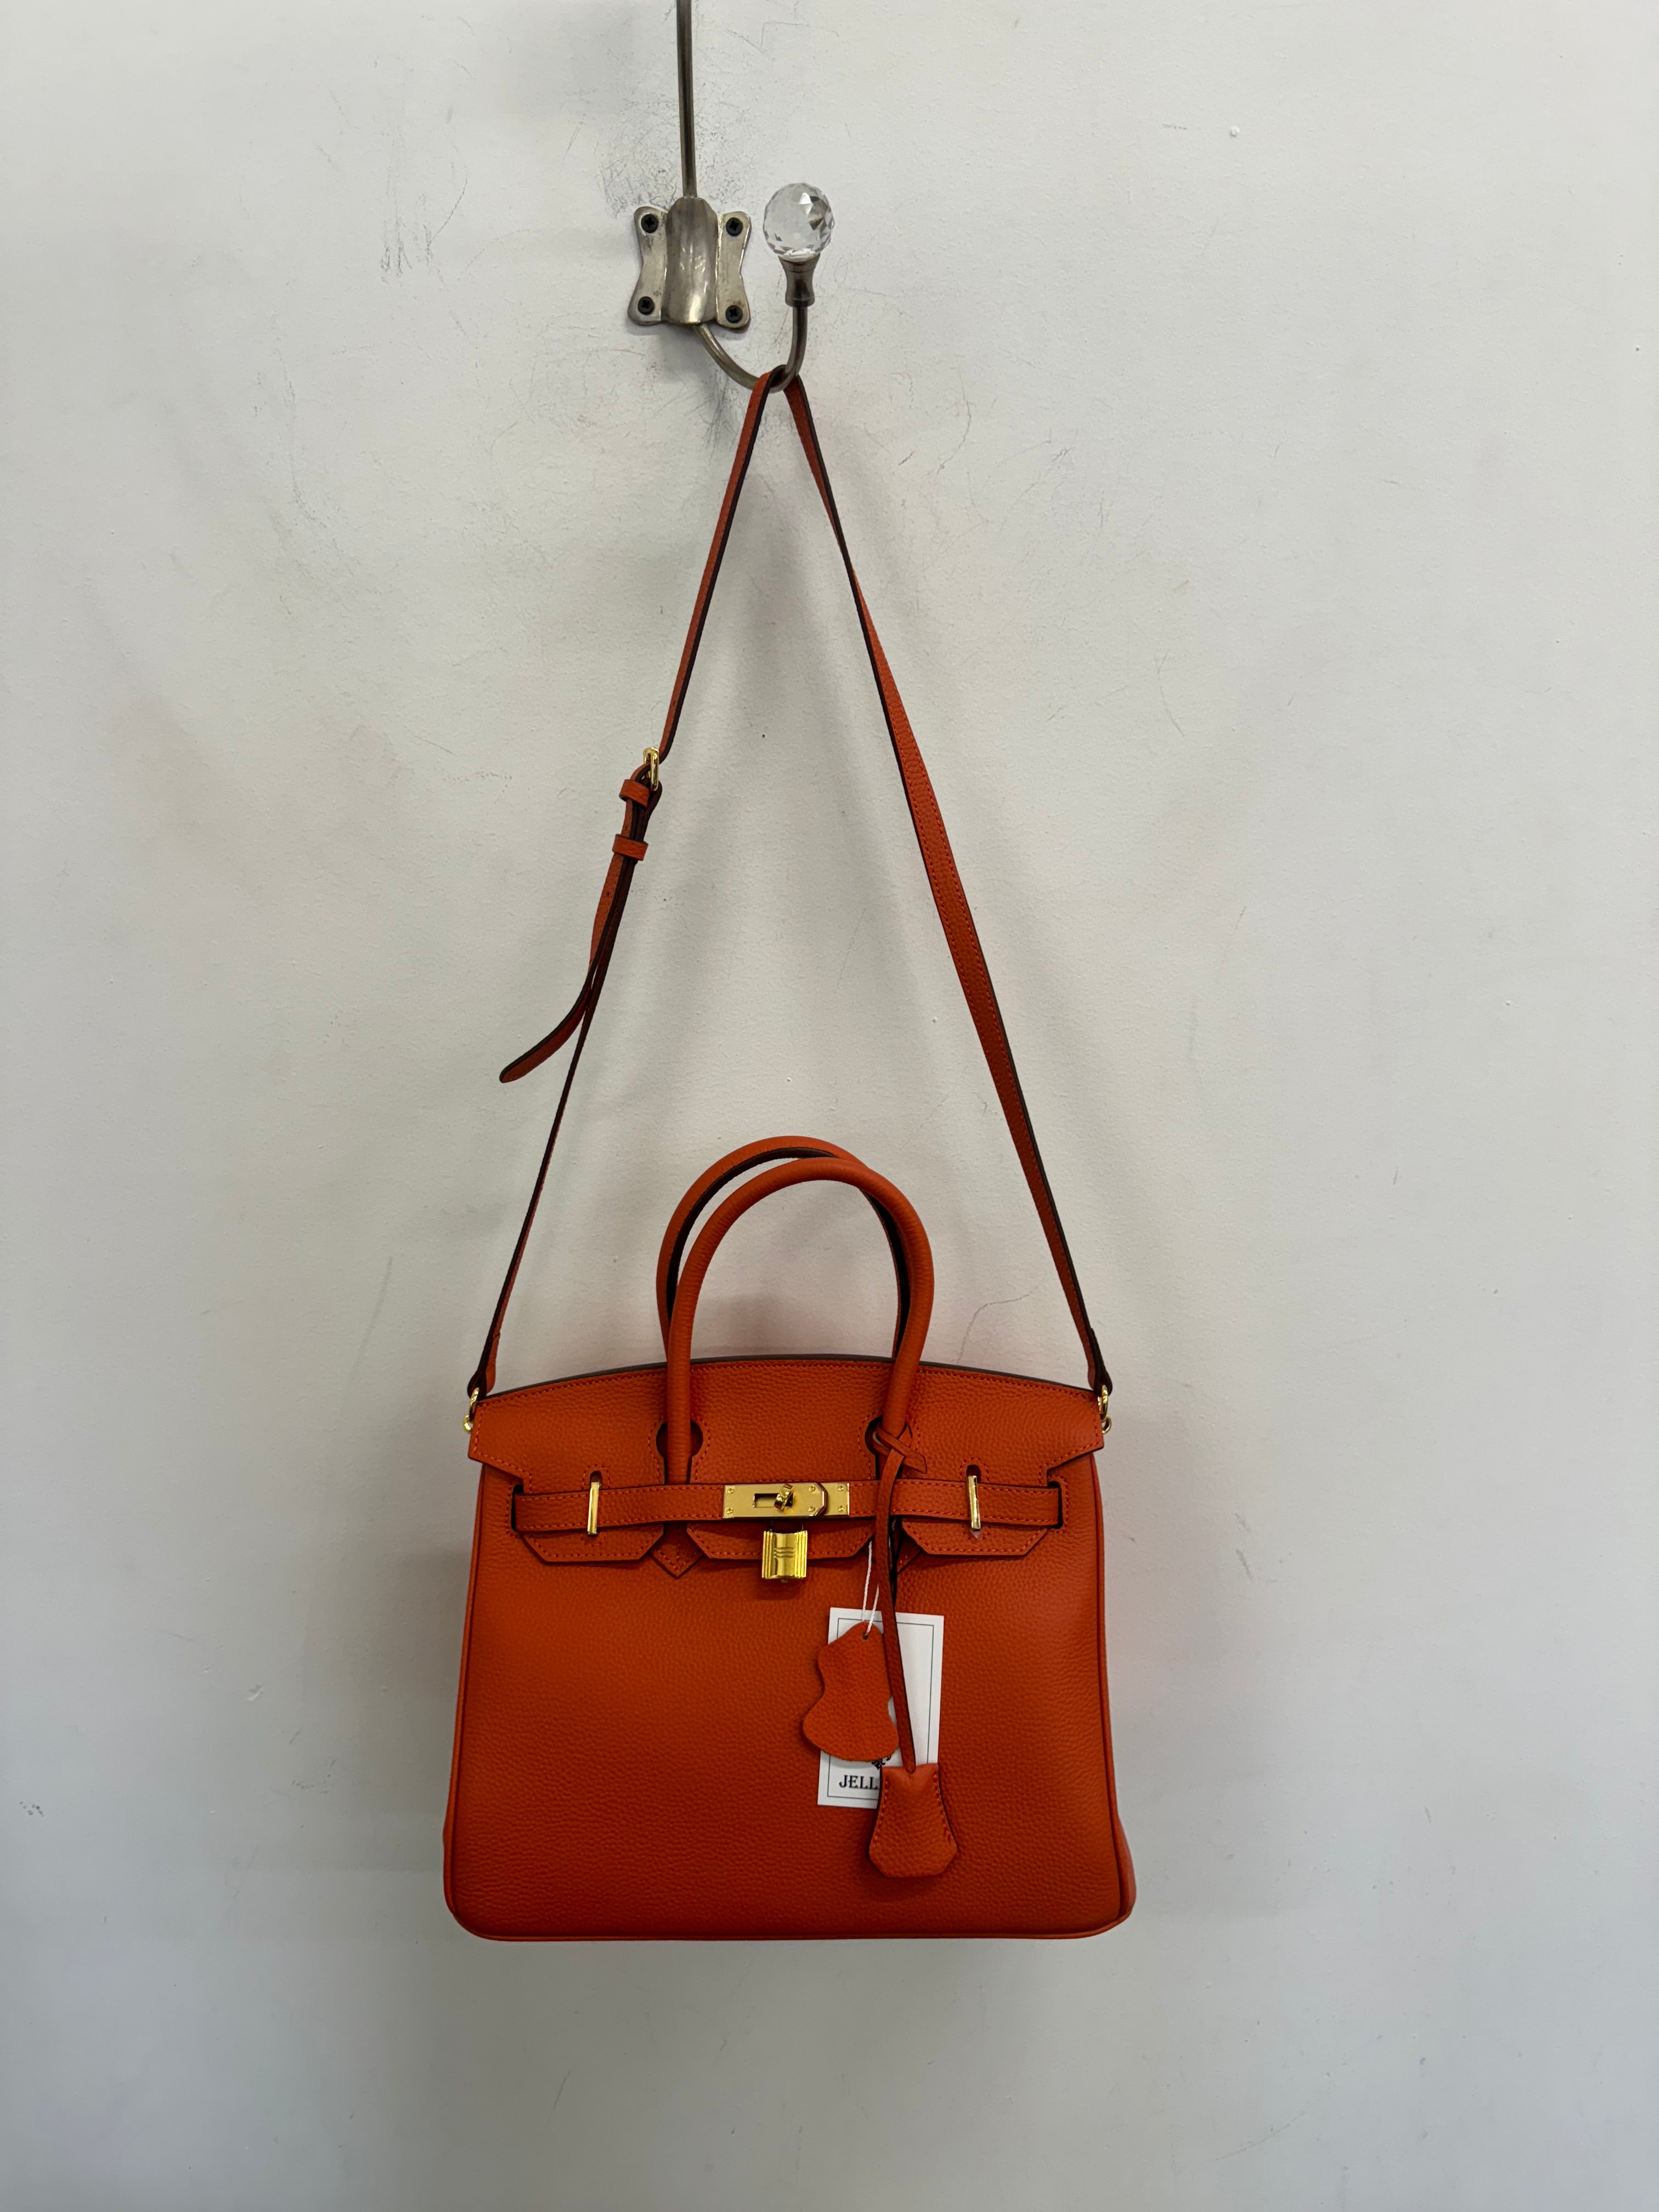 Jellicoe Priscilla Leather Handbag Orange